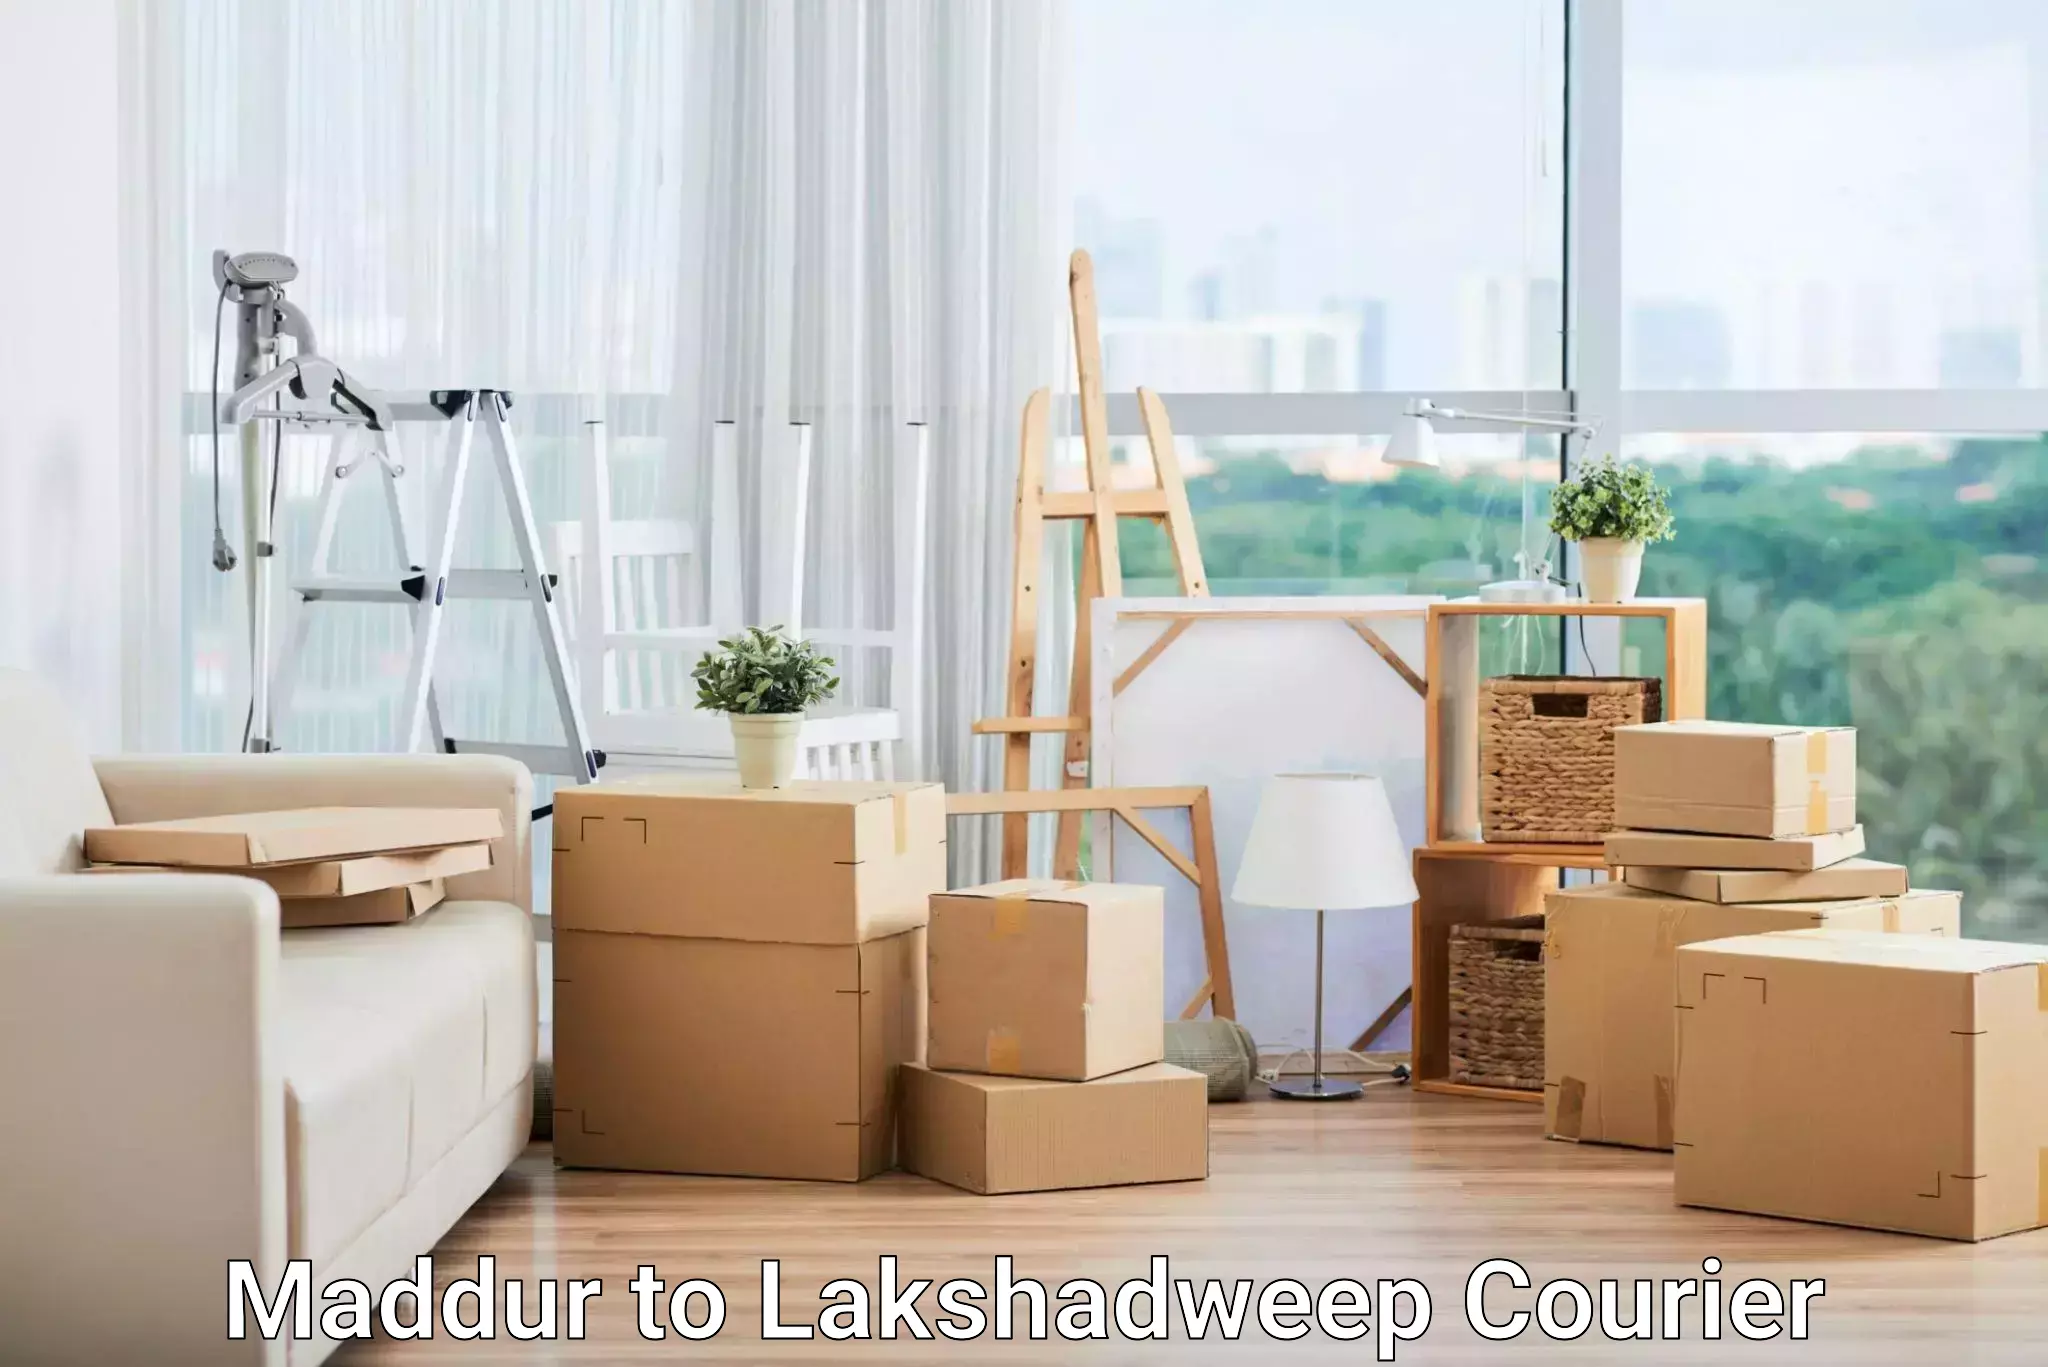 Bulk courier orders Maddur to Lakshadweep